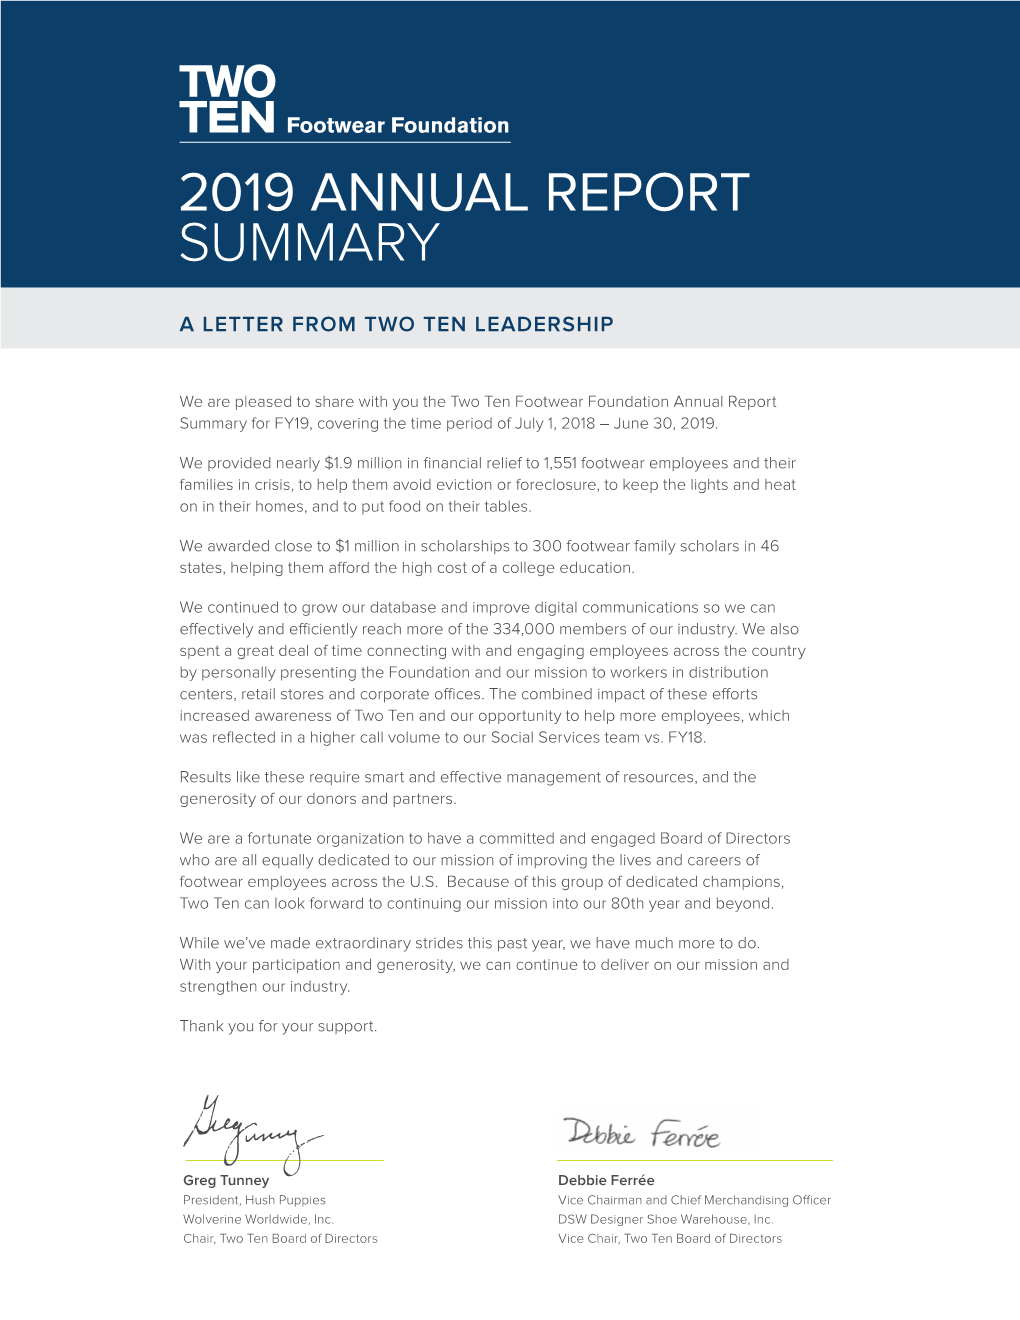 2019 Annual Report Summary